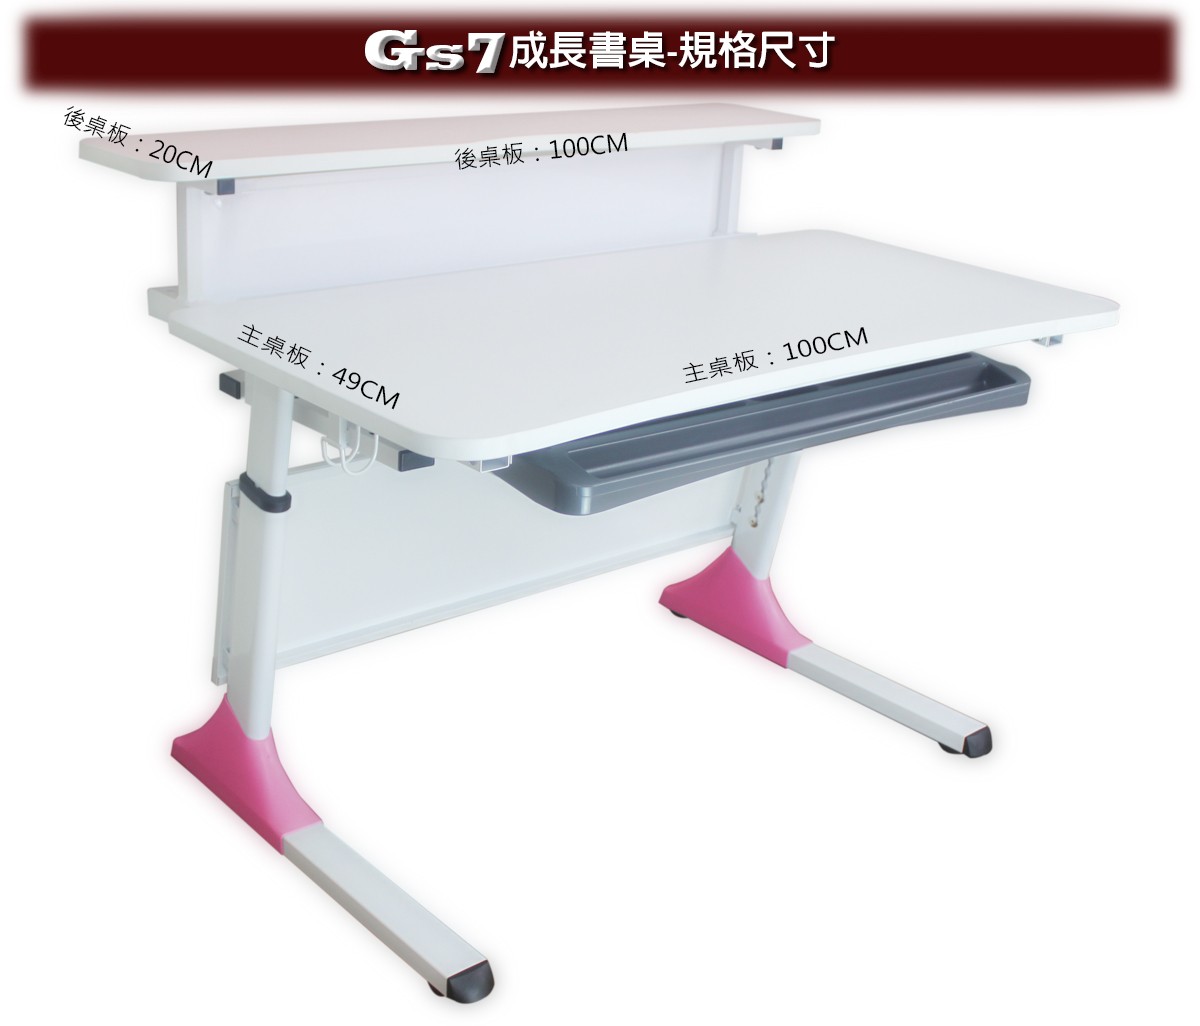 GS7機械升降桌|兒童成長書桌規格尺寸說明圖